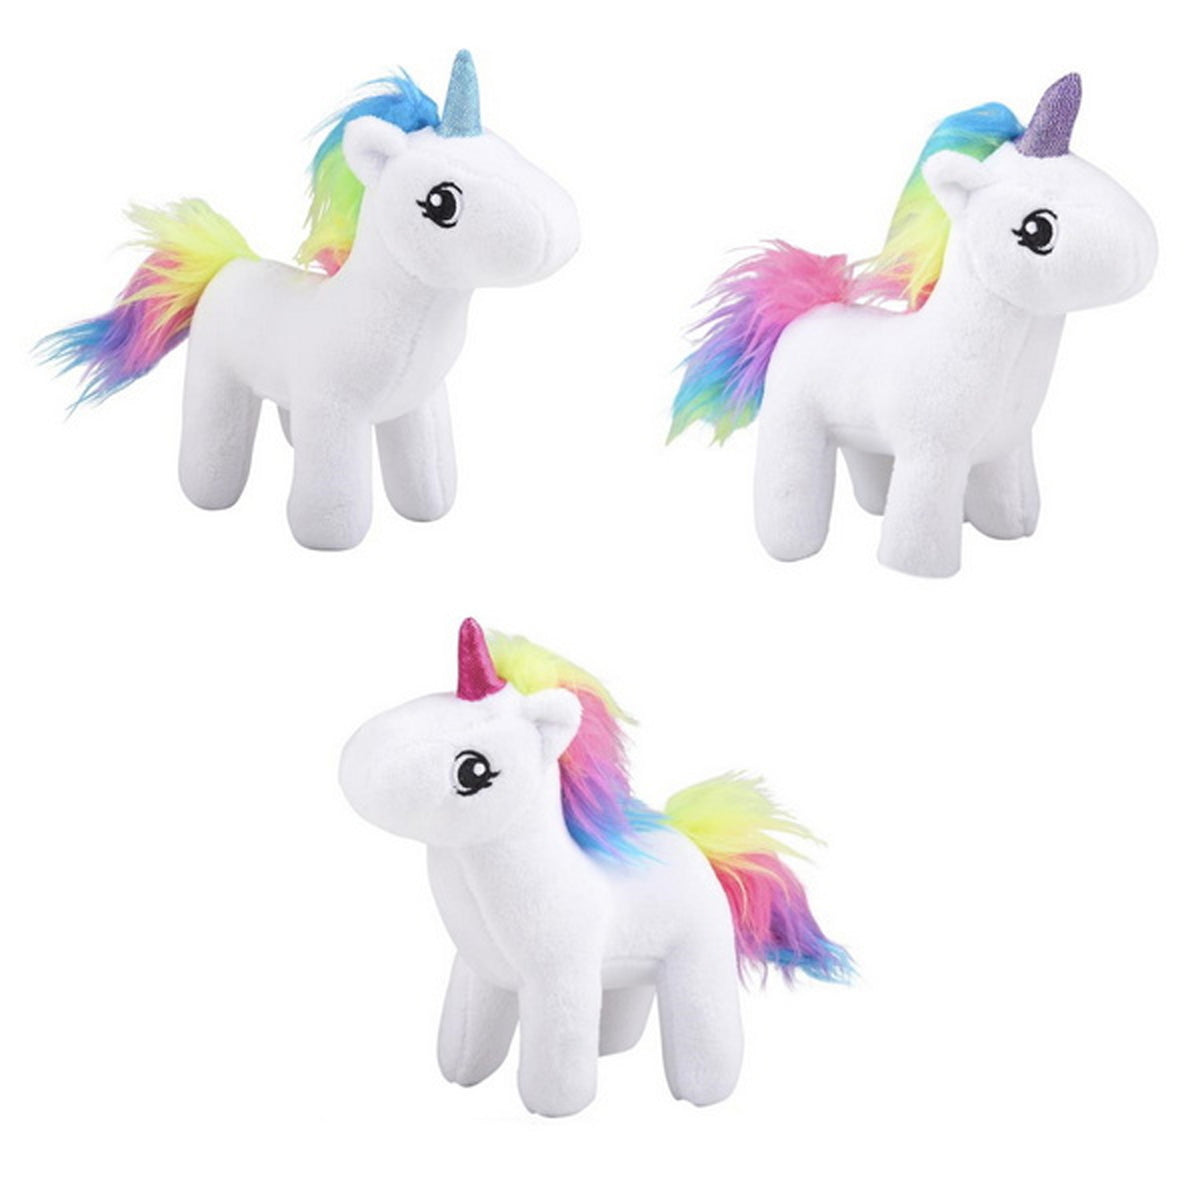 Plush Rainbow Unicorn kids toys (1 Dozen=$29.99)